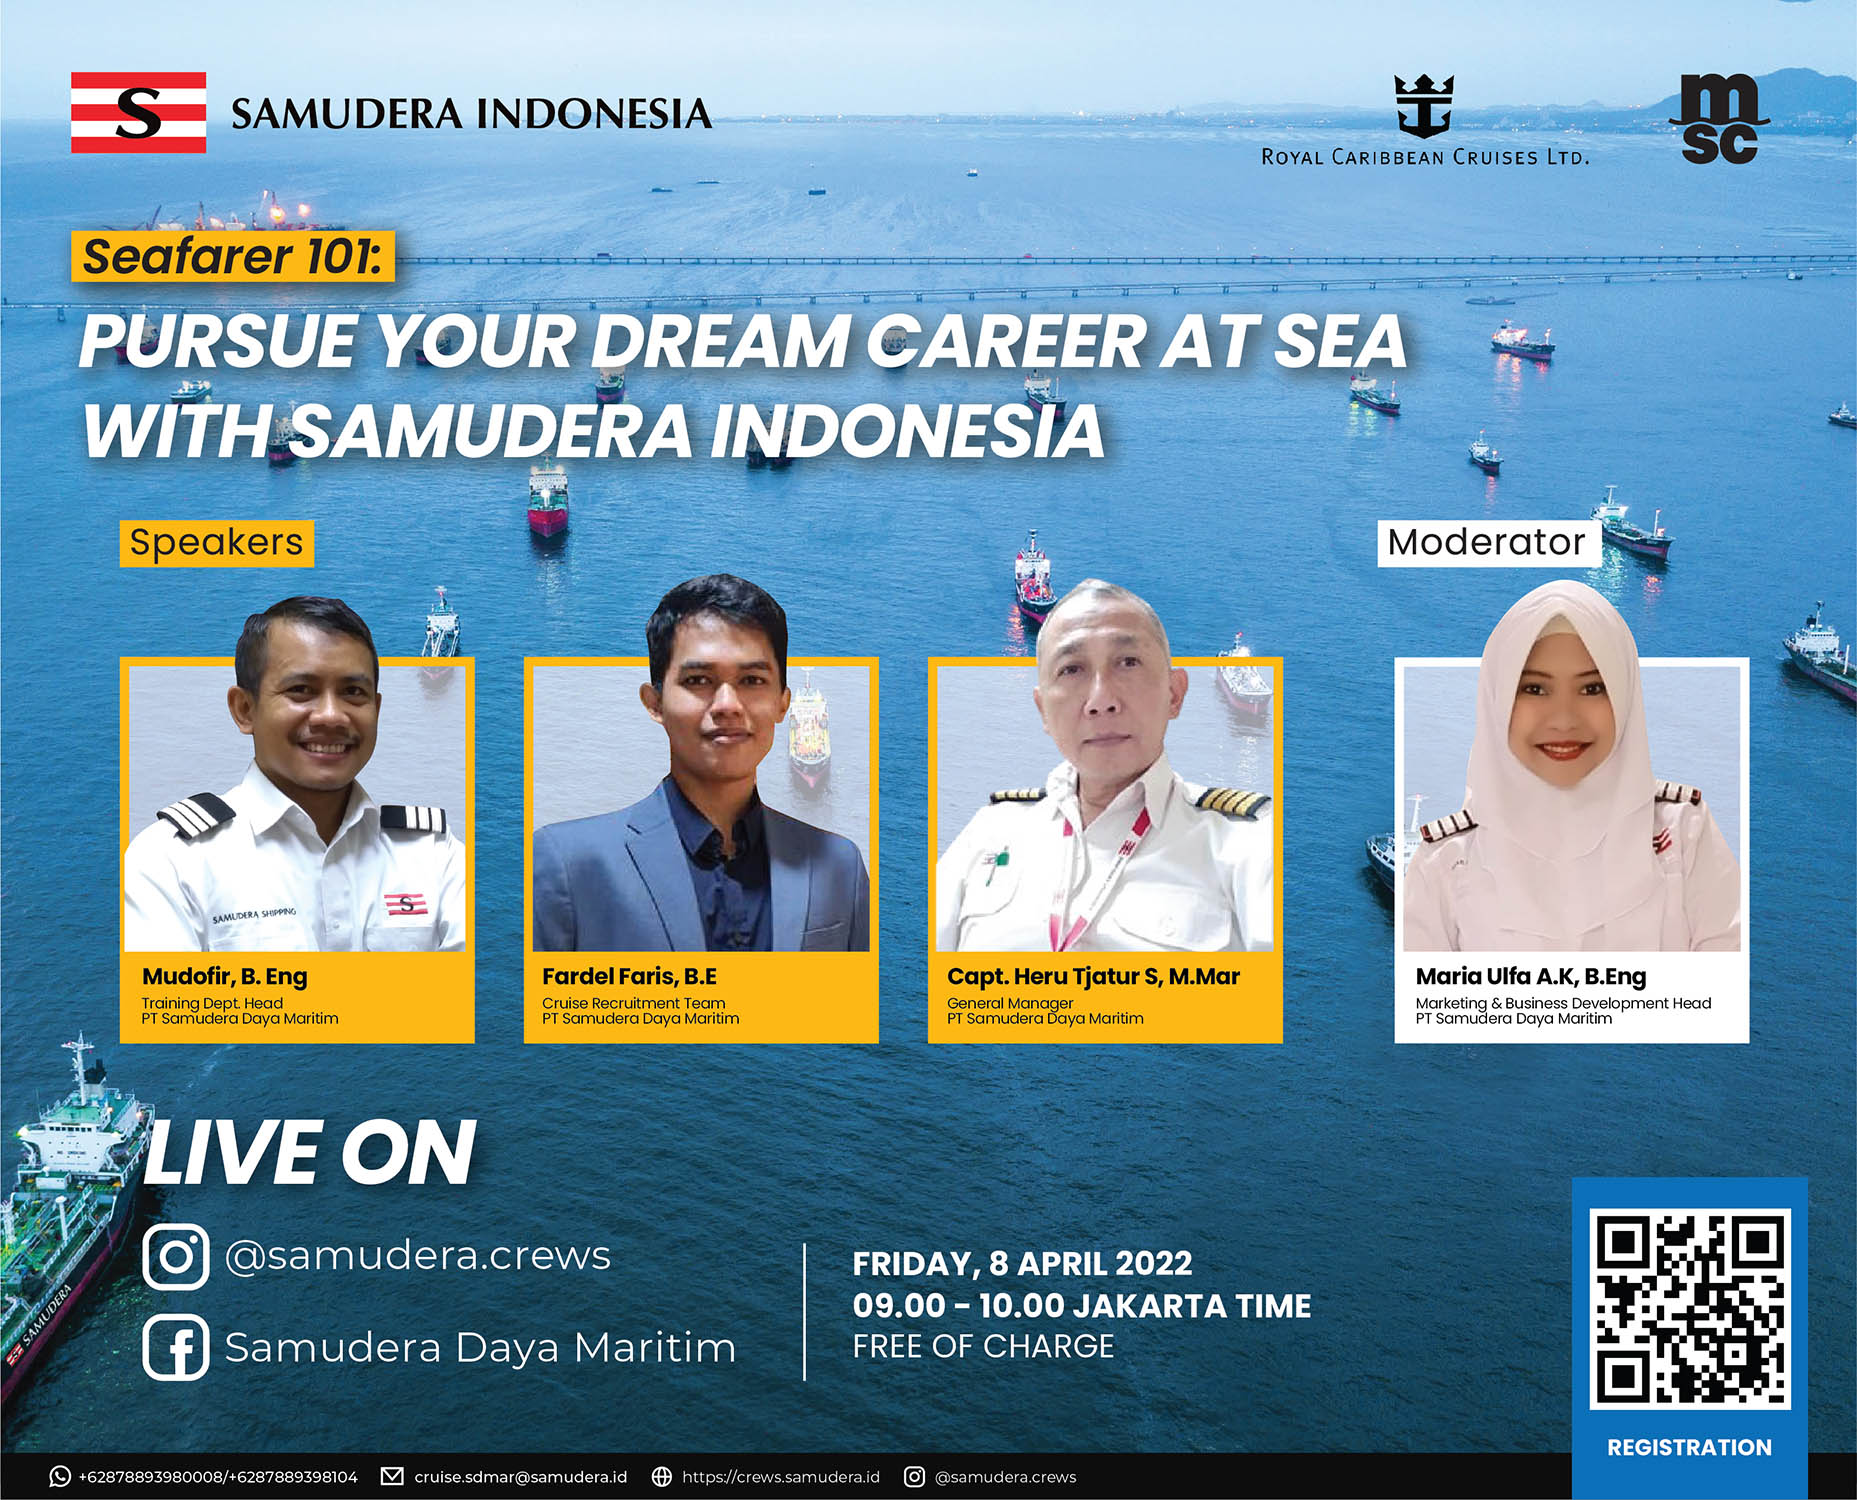 cruise ships recruitment agencies indonesia